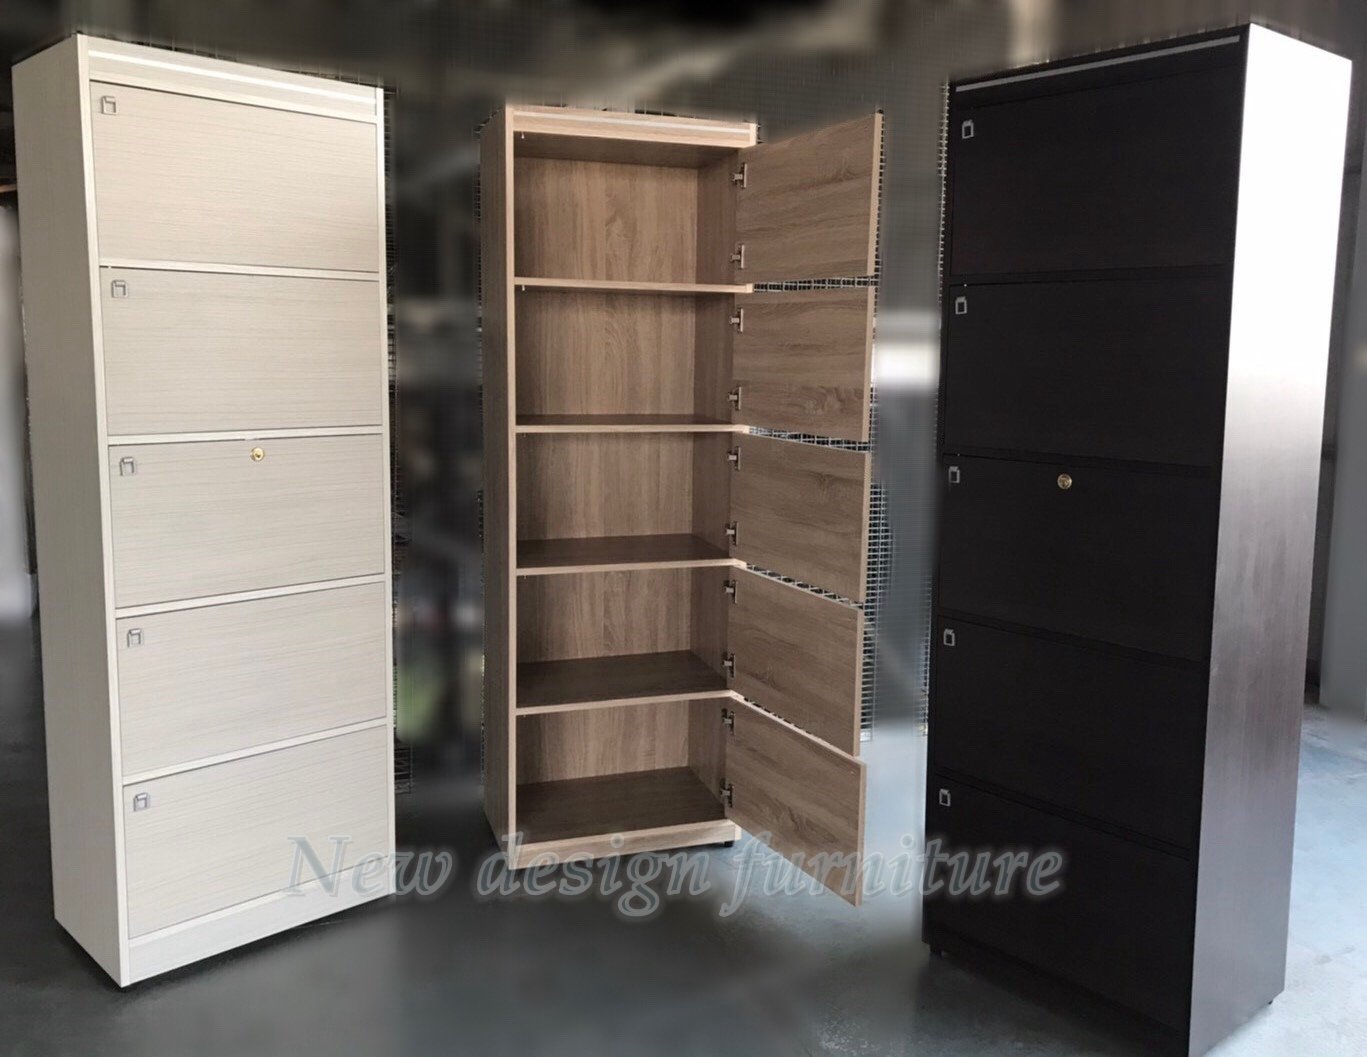 【N D Furniture】台南在地家具-經濟型全木心板60cm有門收納書櫃/置物高櫃(出租套房/學生宿舍)NS